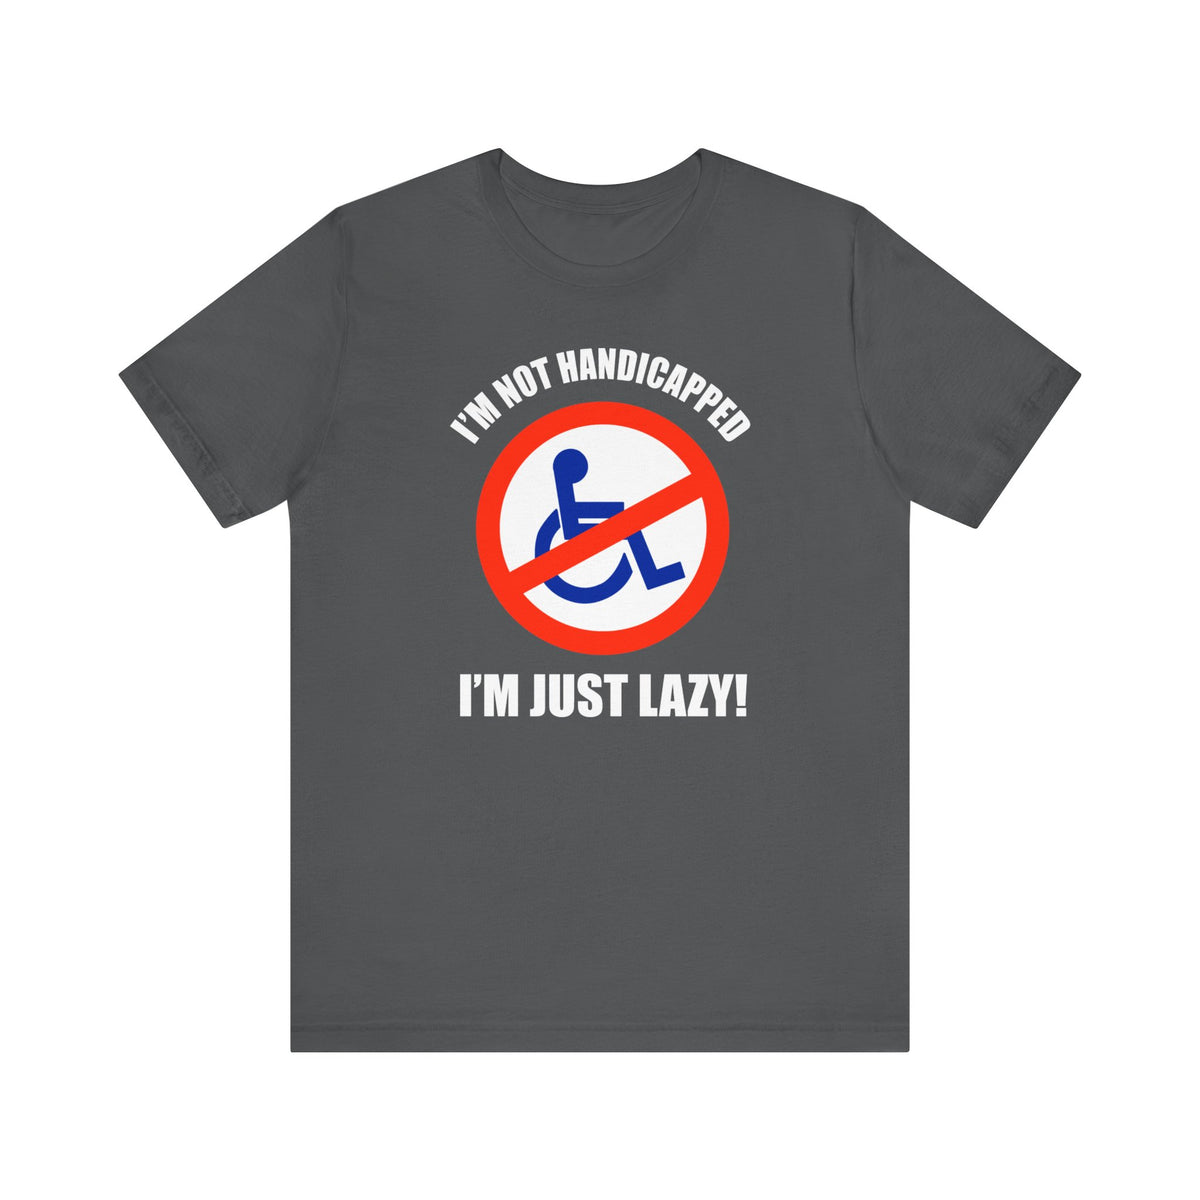 I'm Not Handicapped - I'm Just Lazy - Men's T-Shirt